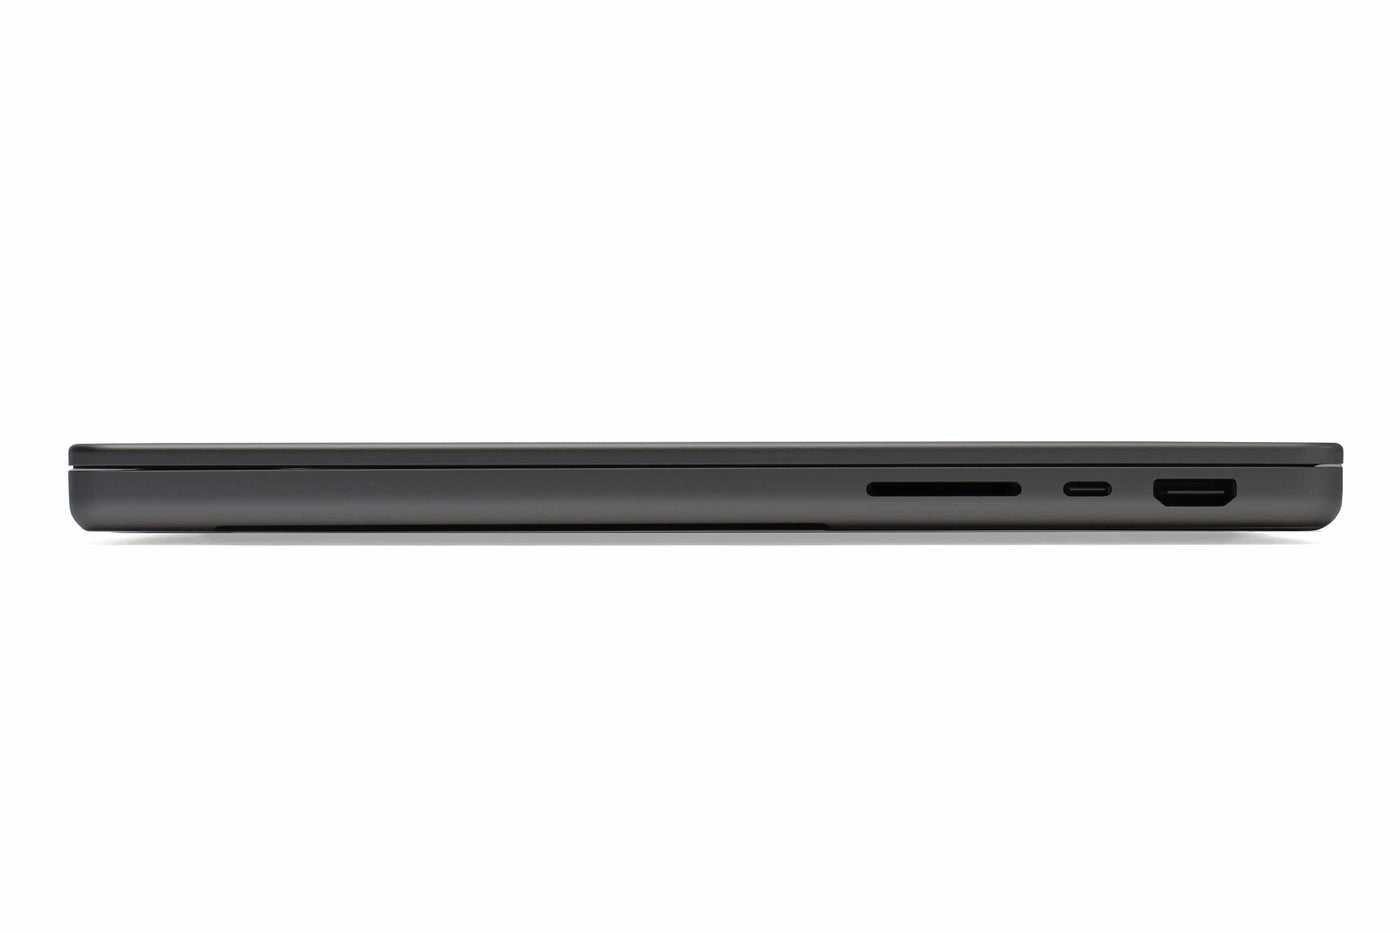 Apple MacBook Pro 14-inch MacBook Pro 14-inch M1 Pro 10-core (Space Grey, 2021) - Fair